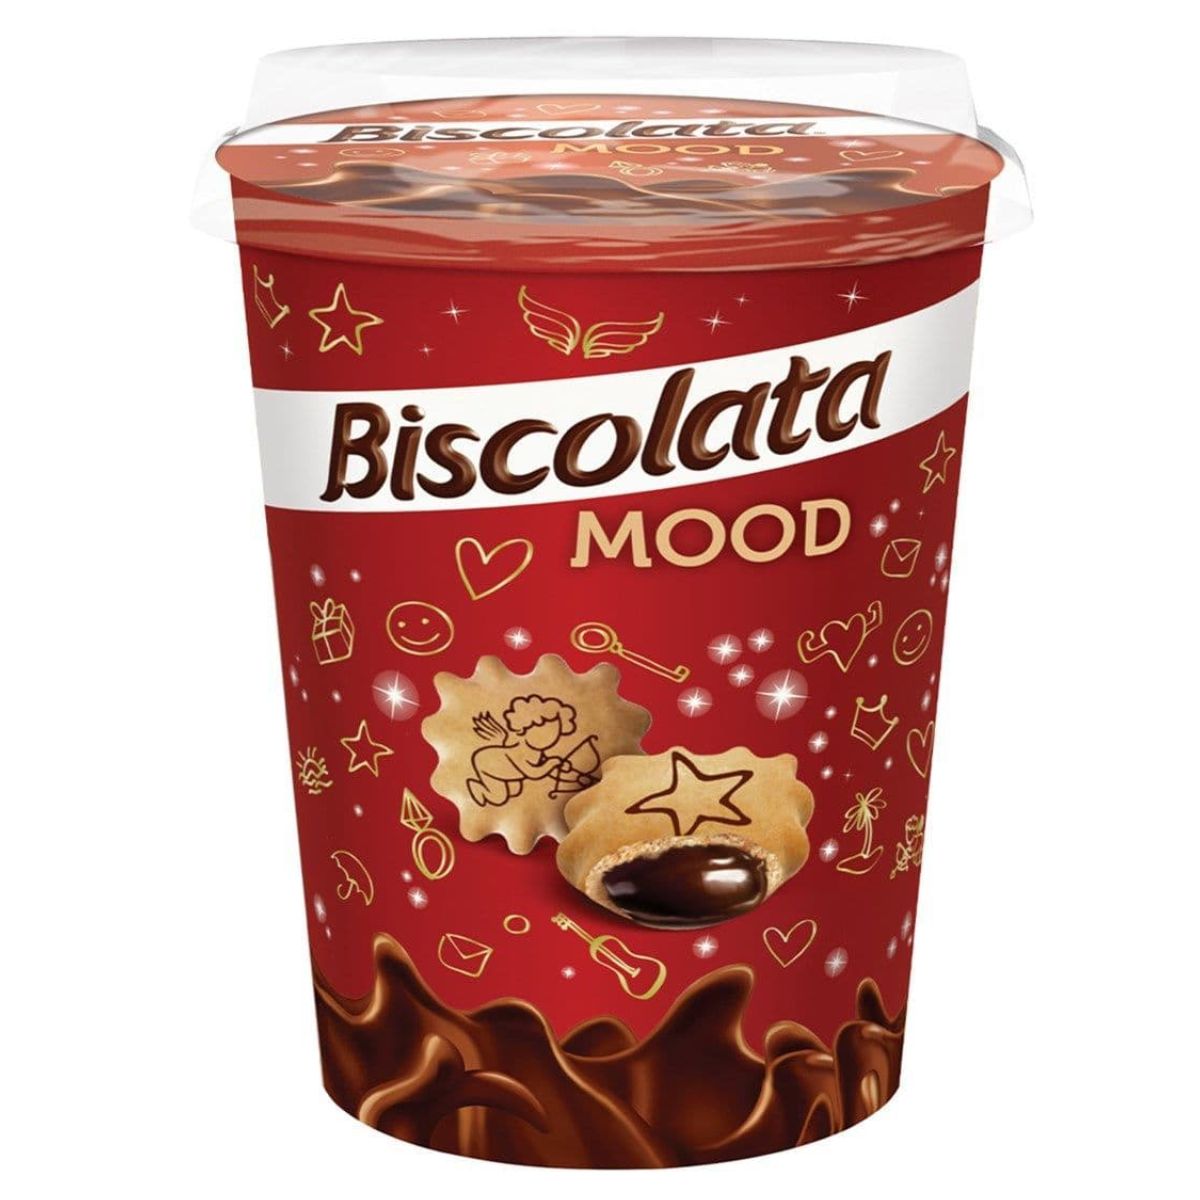 Biscolata - Mood - 125g chocolate ice cream.